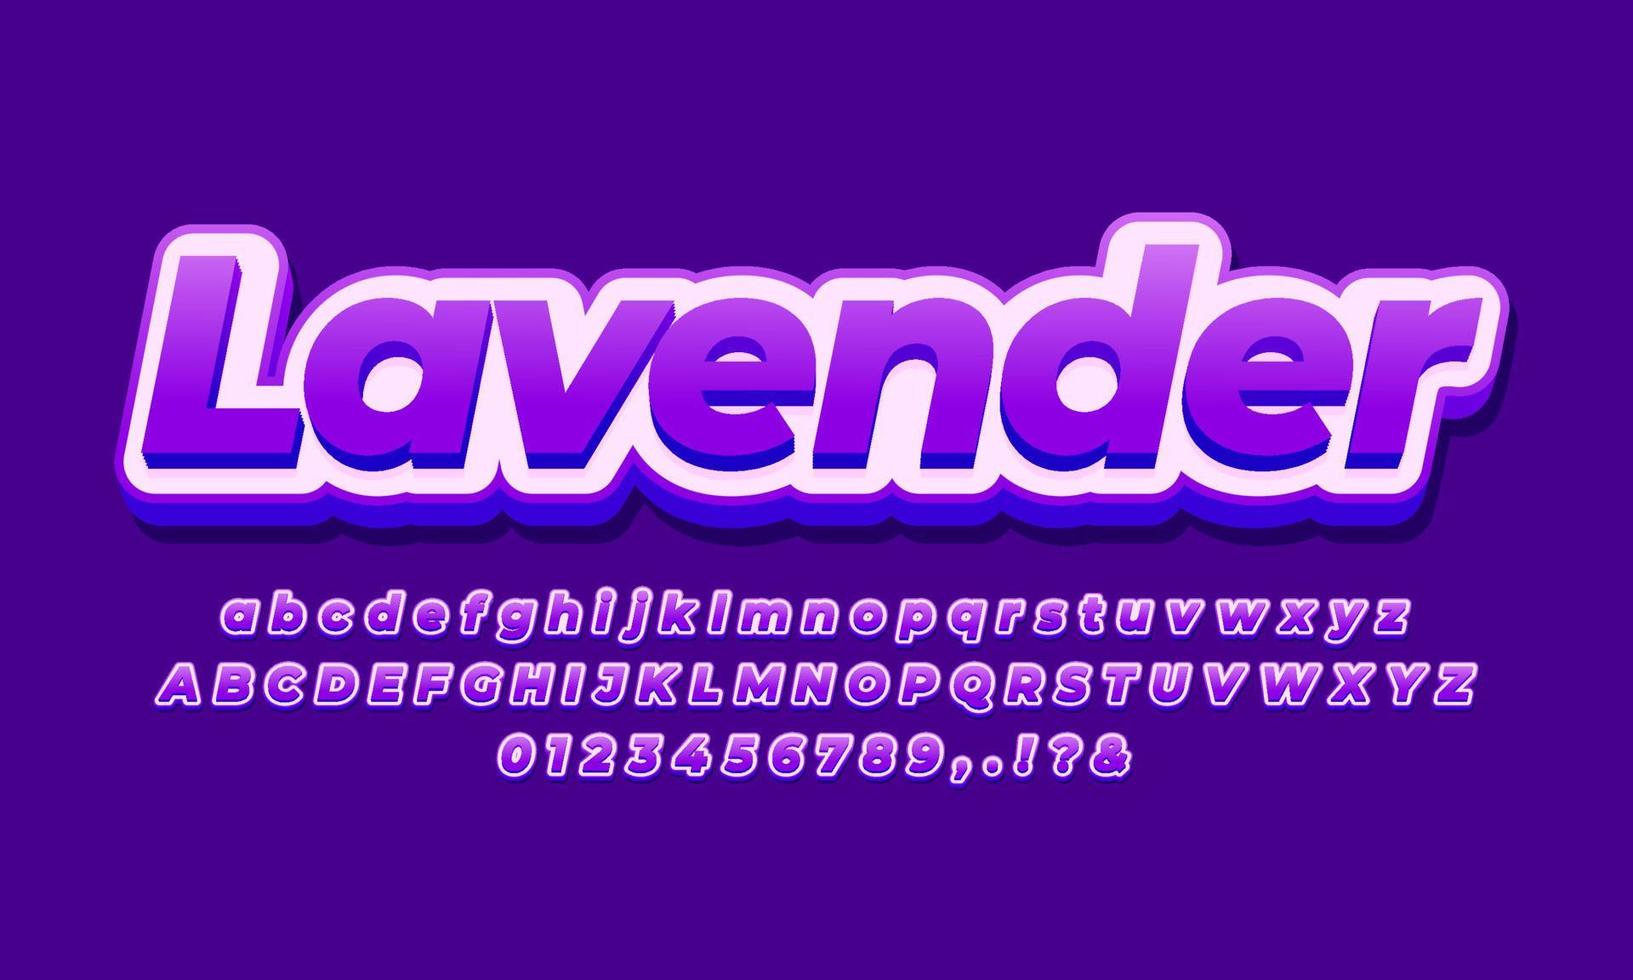 lavender flower text effect design vector template